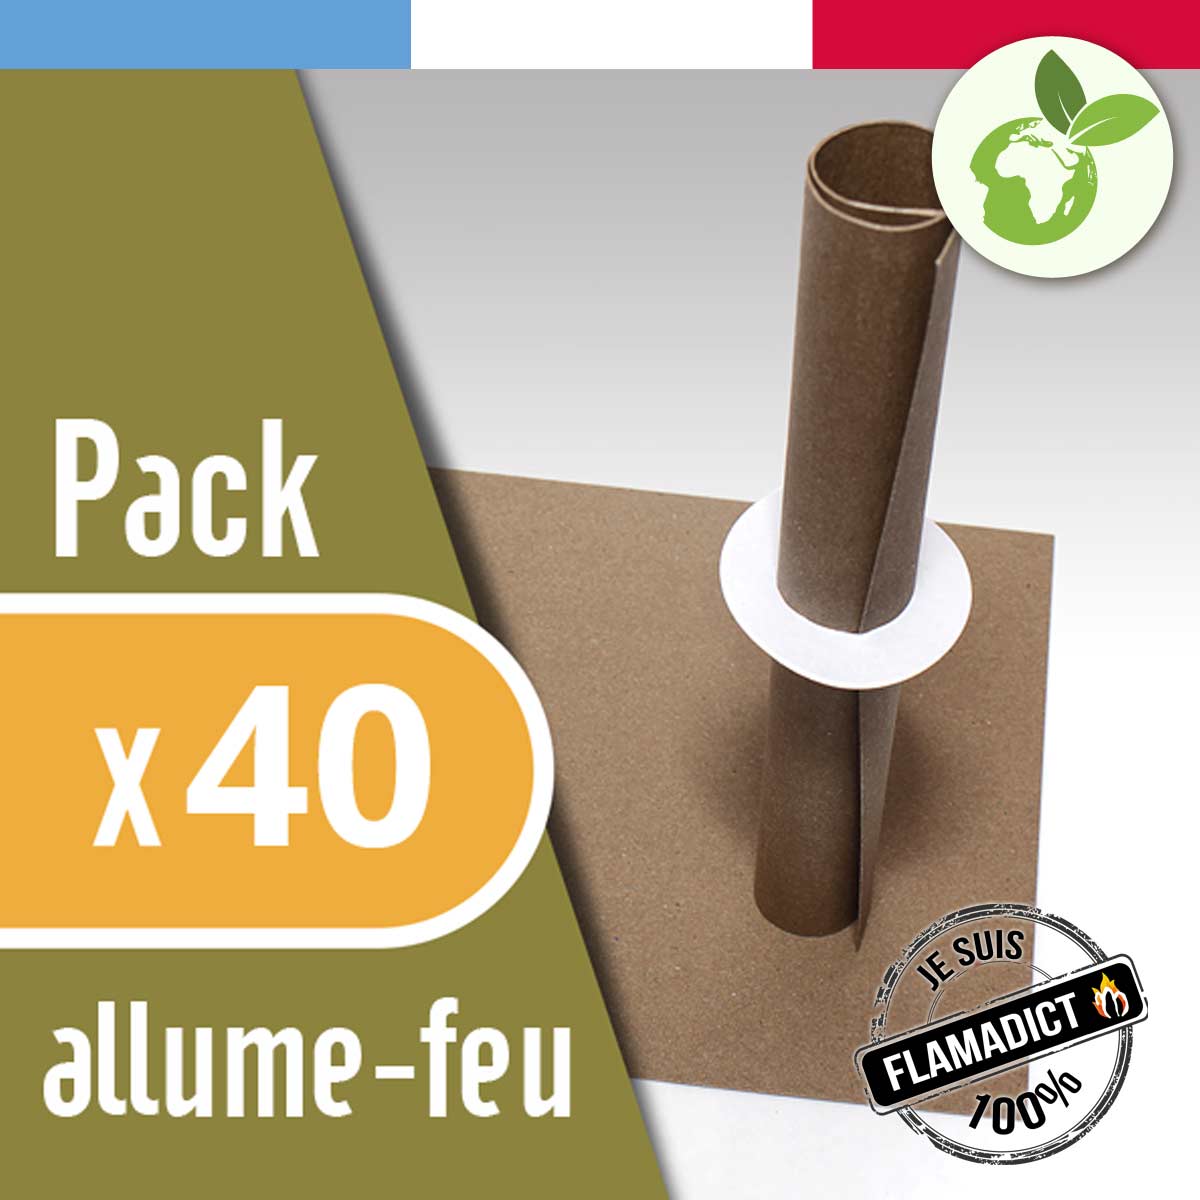 Pack Flamadict : lot de 40 allume-feux - FlaMagic ®